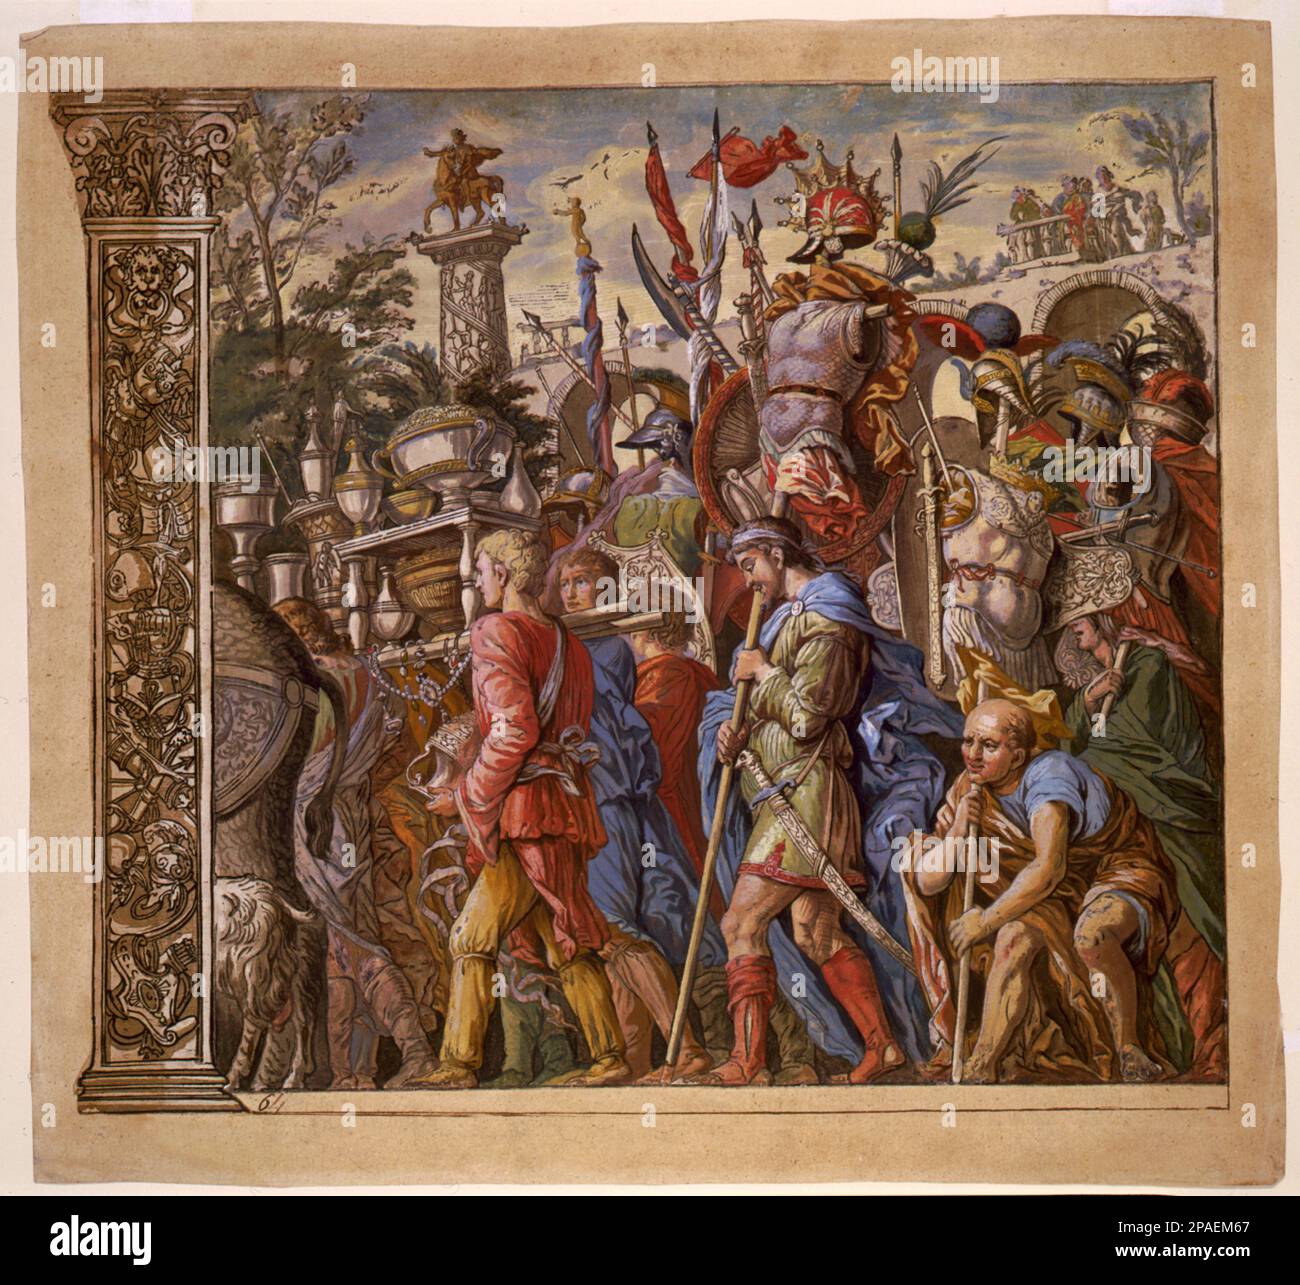 1598 CA : le Triunph (US) Césaris ( le triomphe de Jules César - il TRIONFO DI GIULIO CESARE ), plaque 6 ( chiaroscuro coupe de bois avec gouache ), par le peintre italien Andrea Andreani ( 1584 - 1610 ), des fresques originales d'ANDREA MANTEGNA . - PORTRAIT - RITRATTO - ANTICA ROMA - ROME ANTIQUE - RINASCIMENTO - RENAISSANCE - ARTE - ARTS VISUELS - ARTI VISIVE - PITTORE - GRAVURE - INCISIONE - ACQUARELLO --- ARCHIVIO GBB Banque D'Images